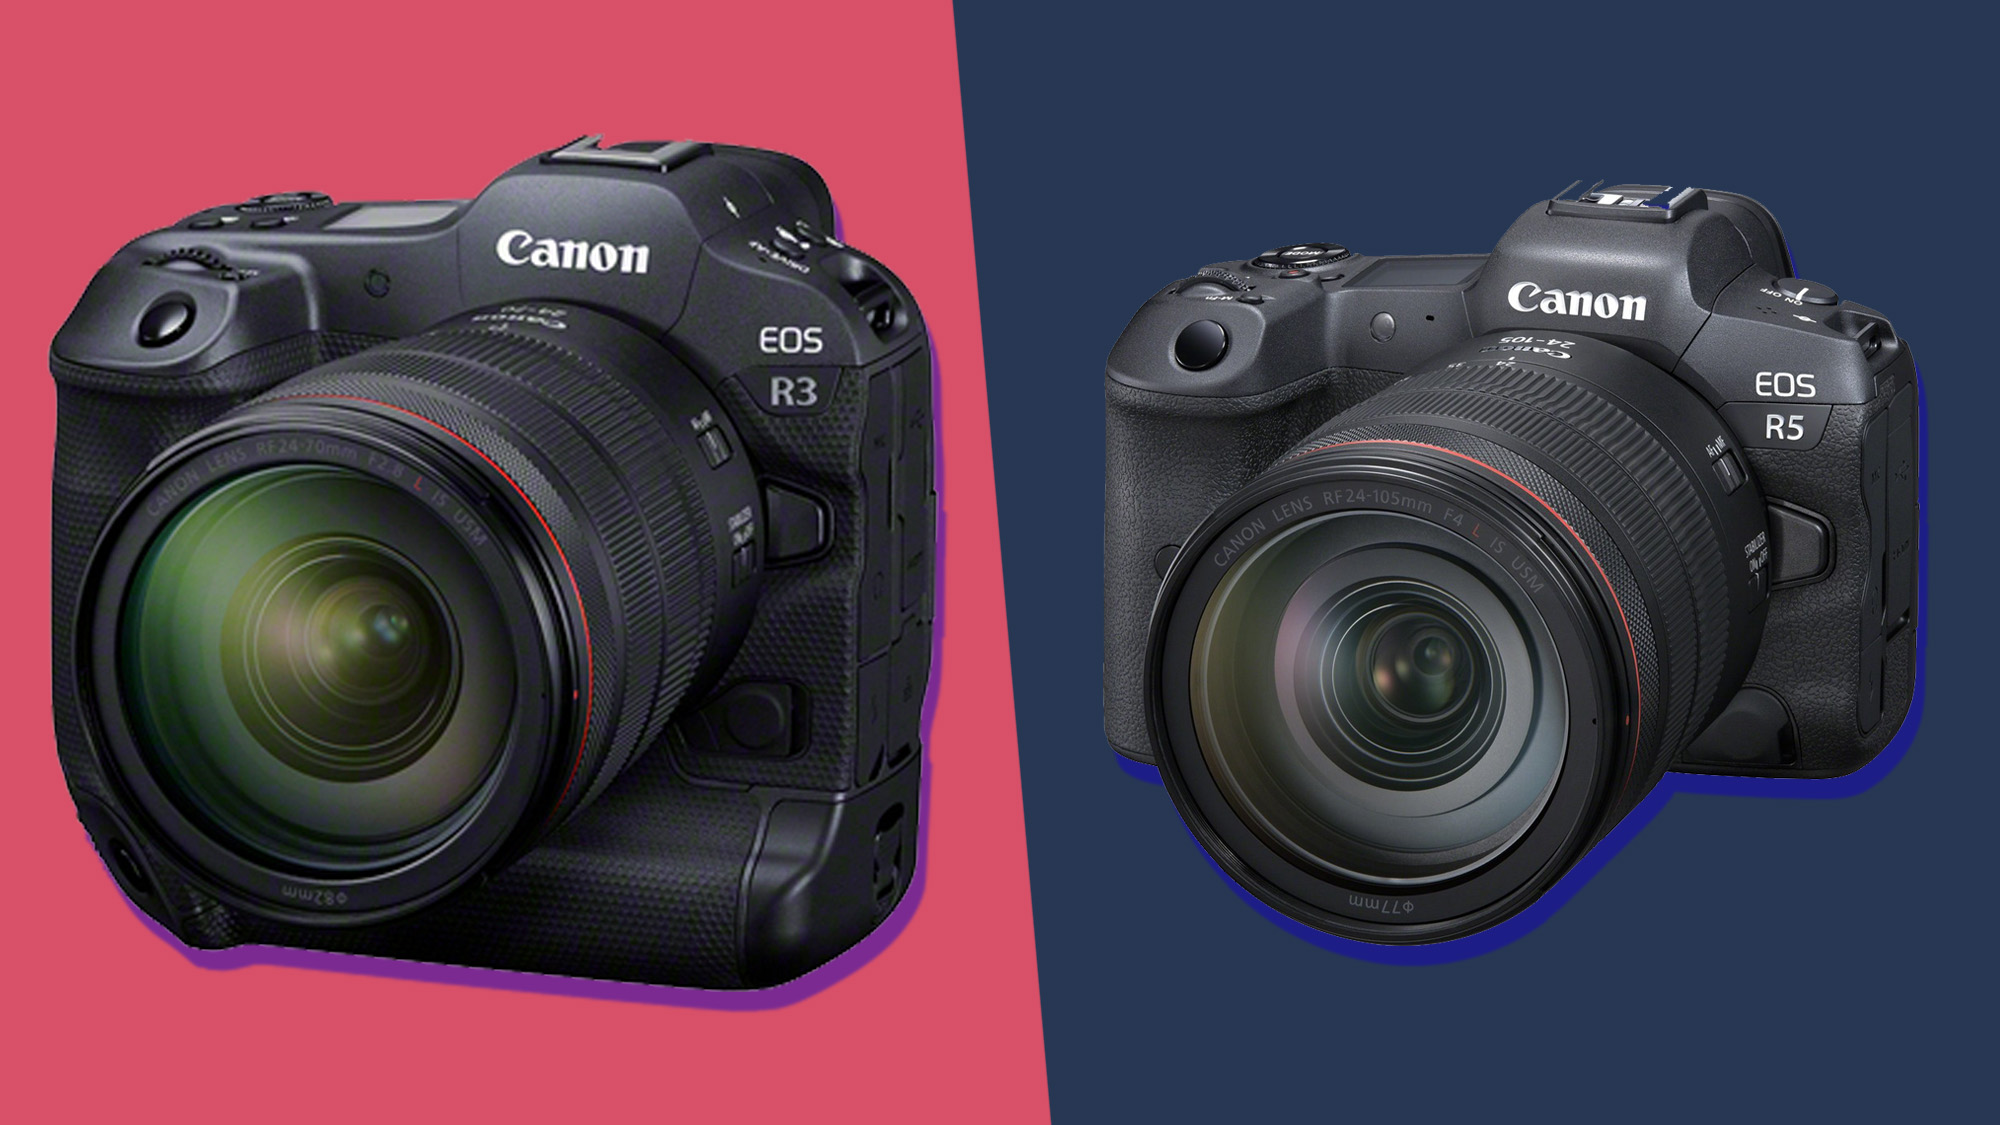 The Canon EOS R3 mirrorless camera next to the Canon EOS R5